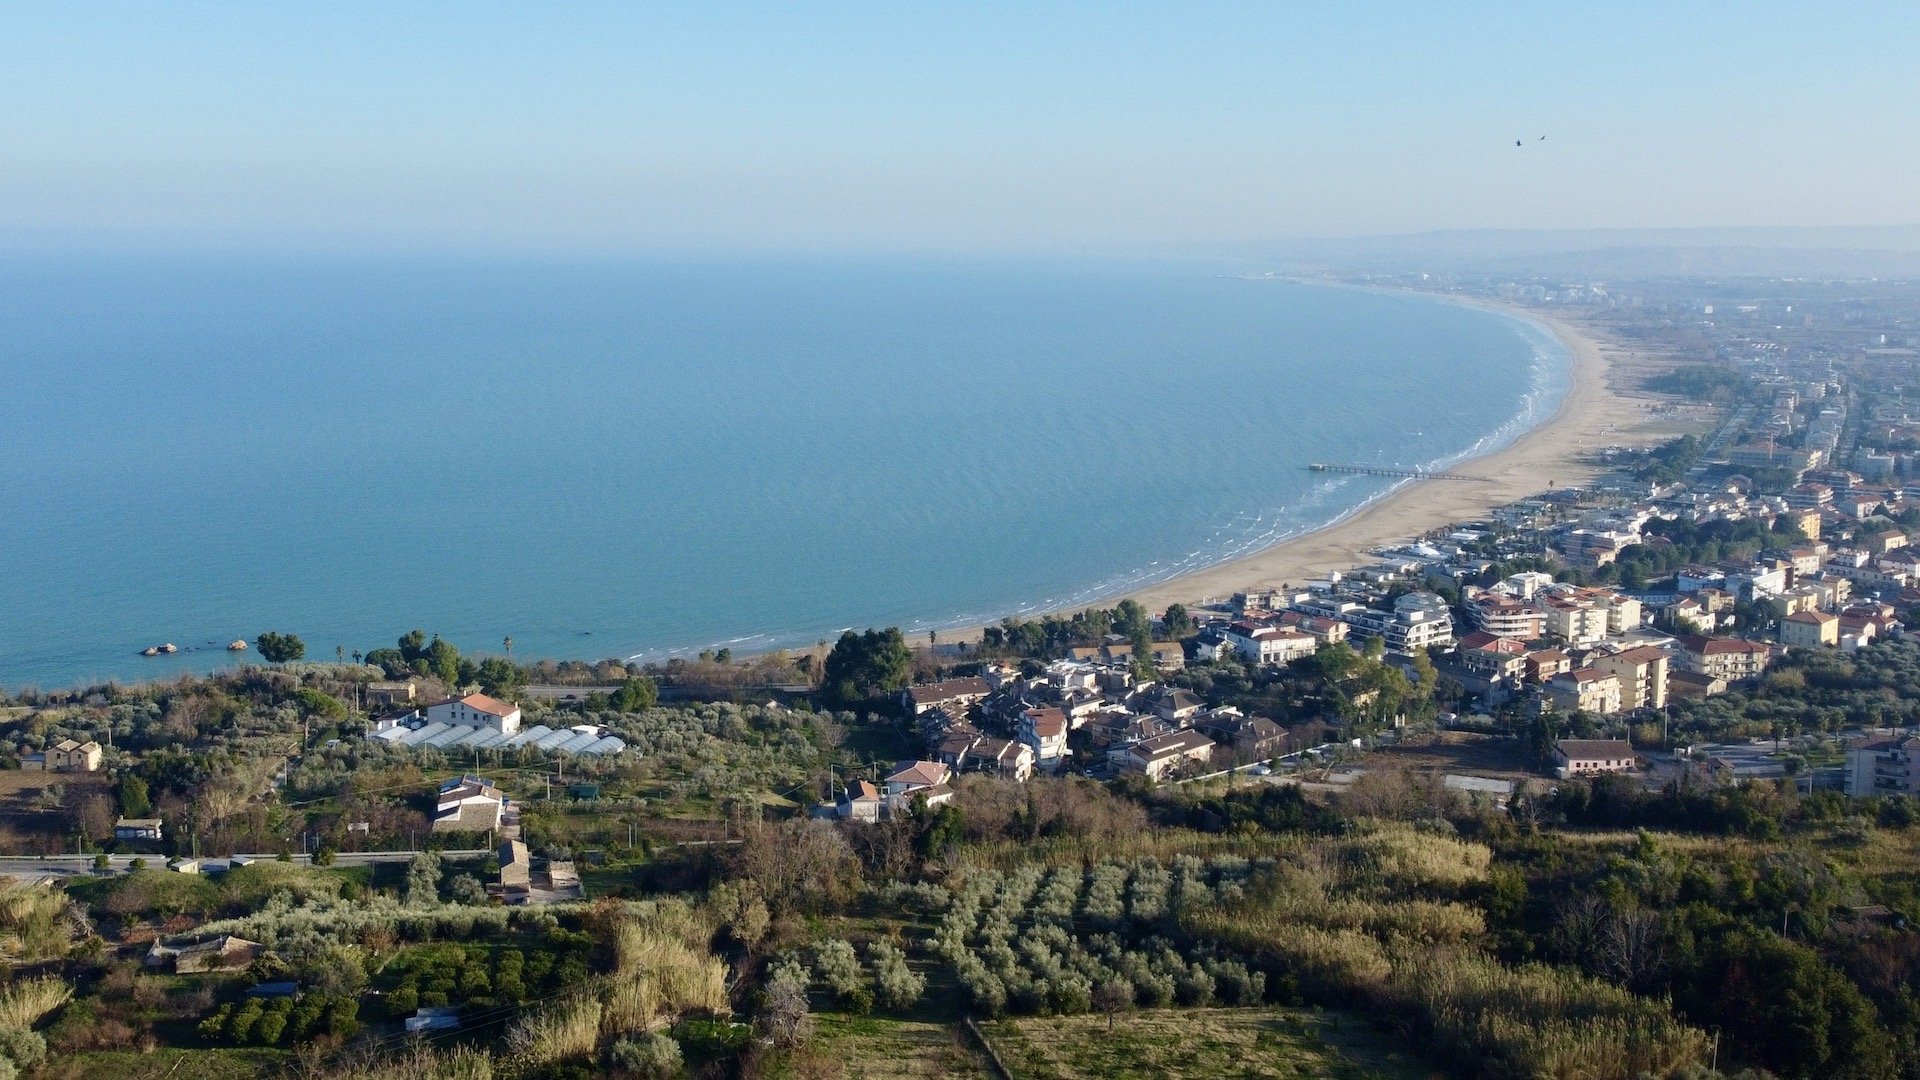 Panoramic view of Adriatic sea taken from Vasto historic center